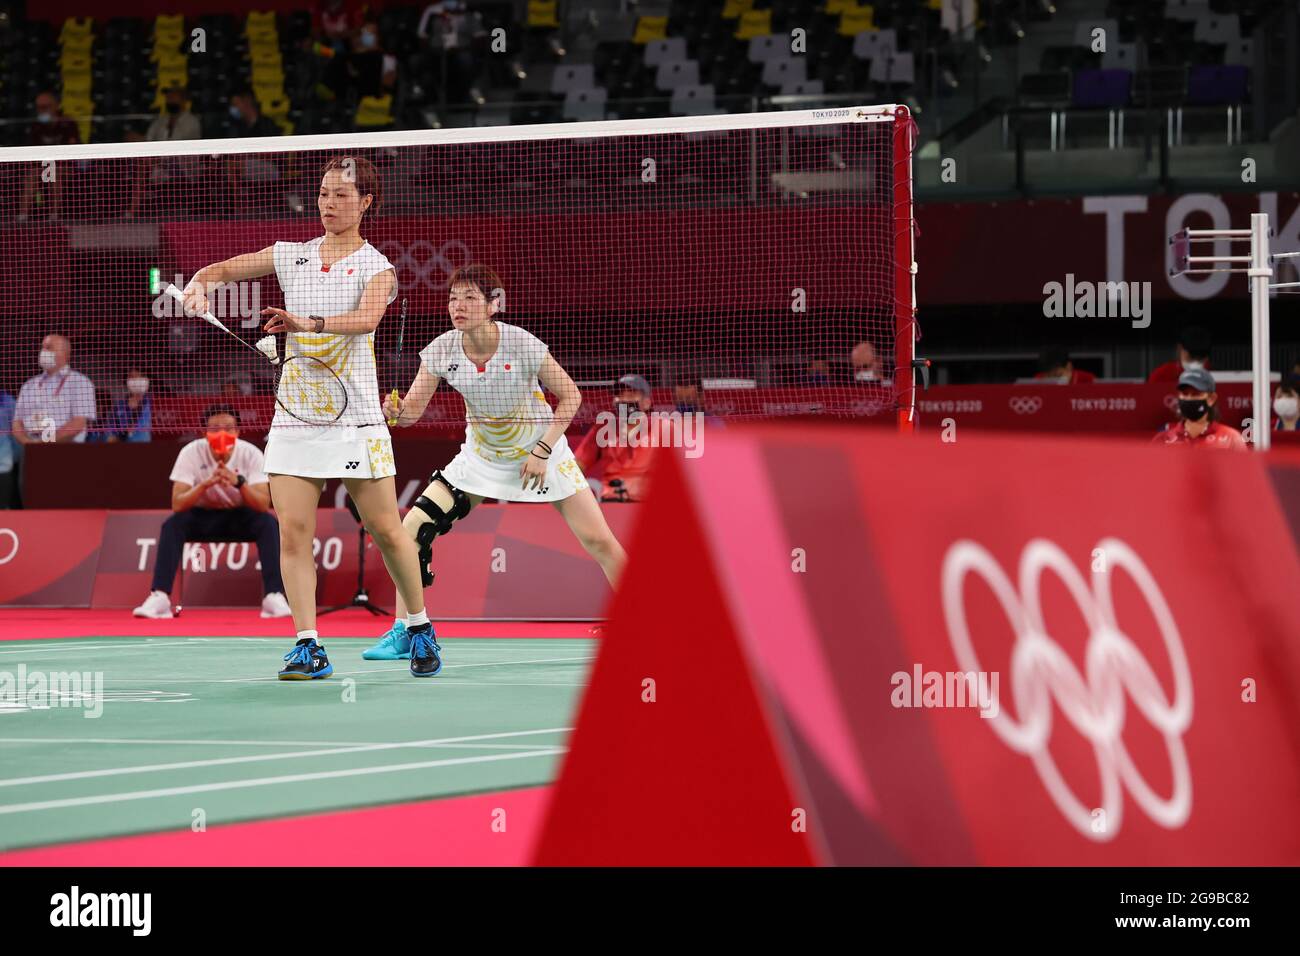 Badminton olympics 2021 live